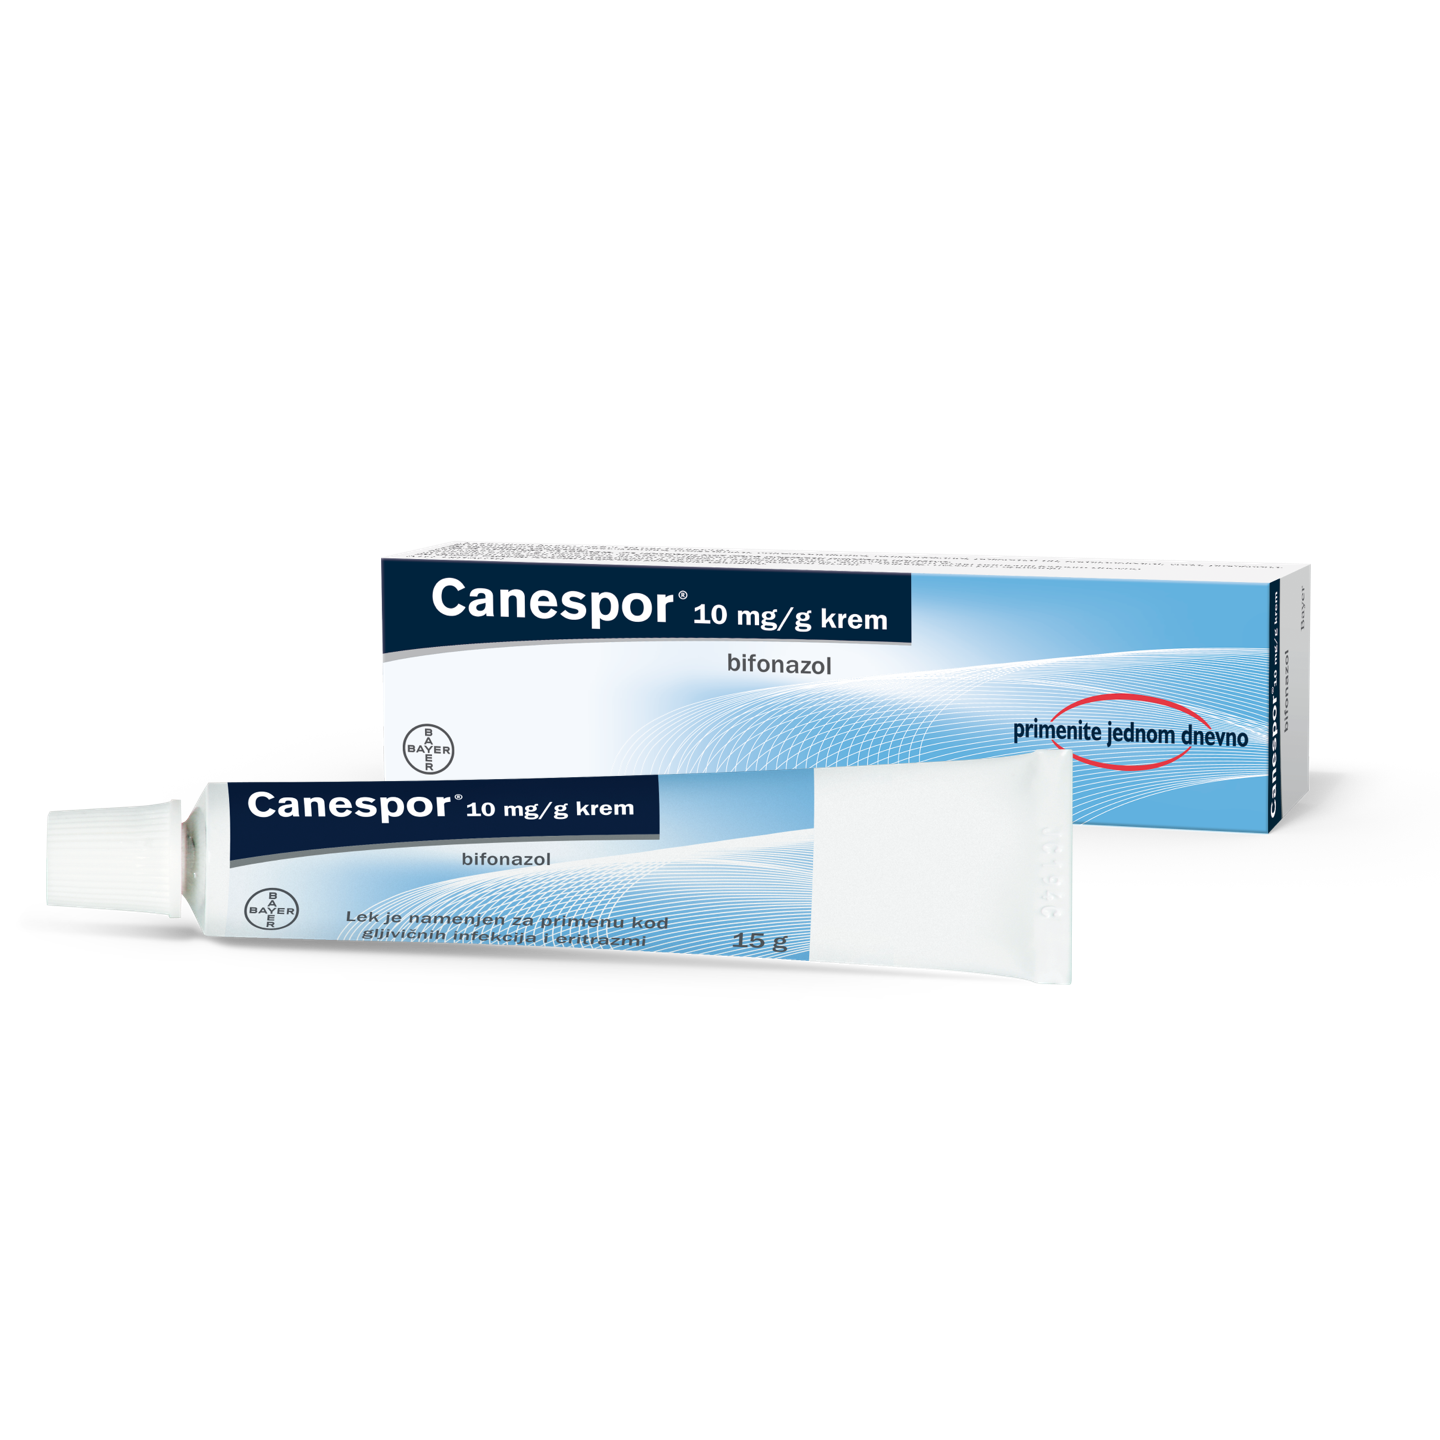 Canespor 10 mg/g krem